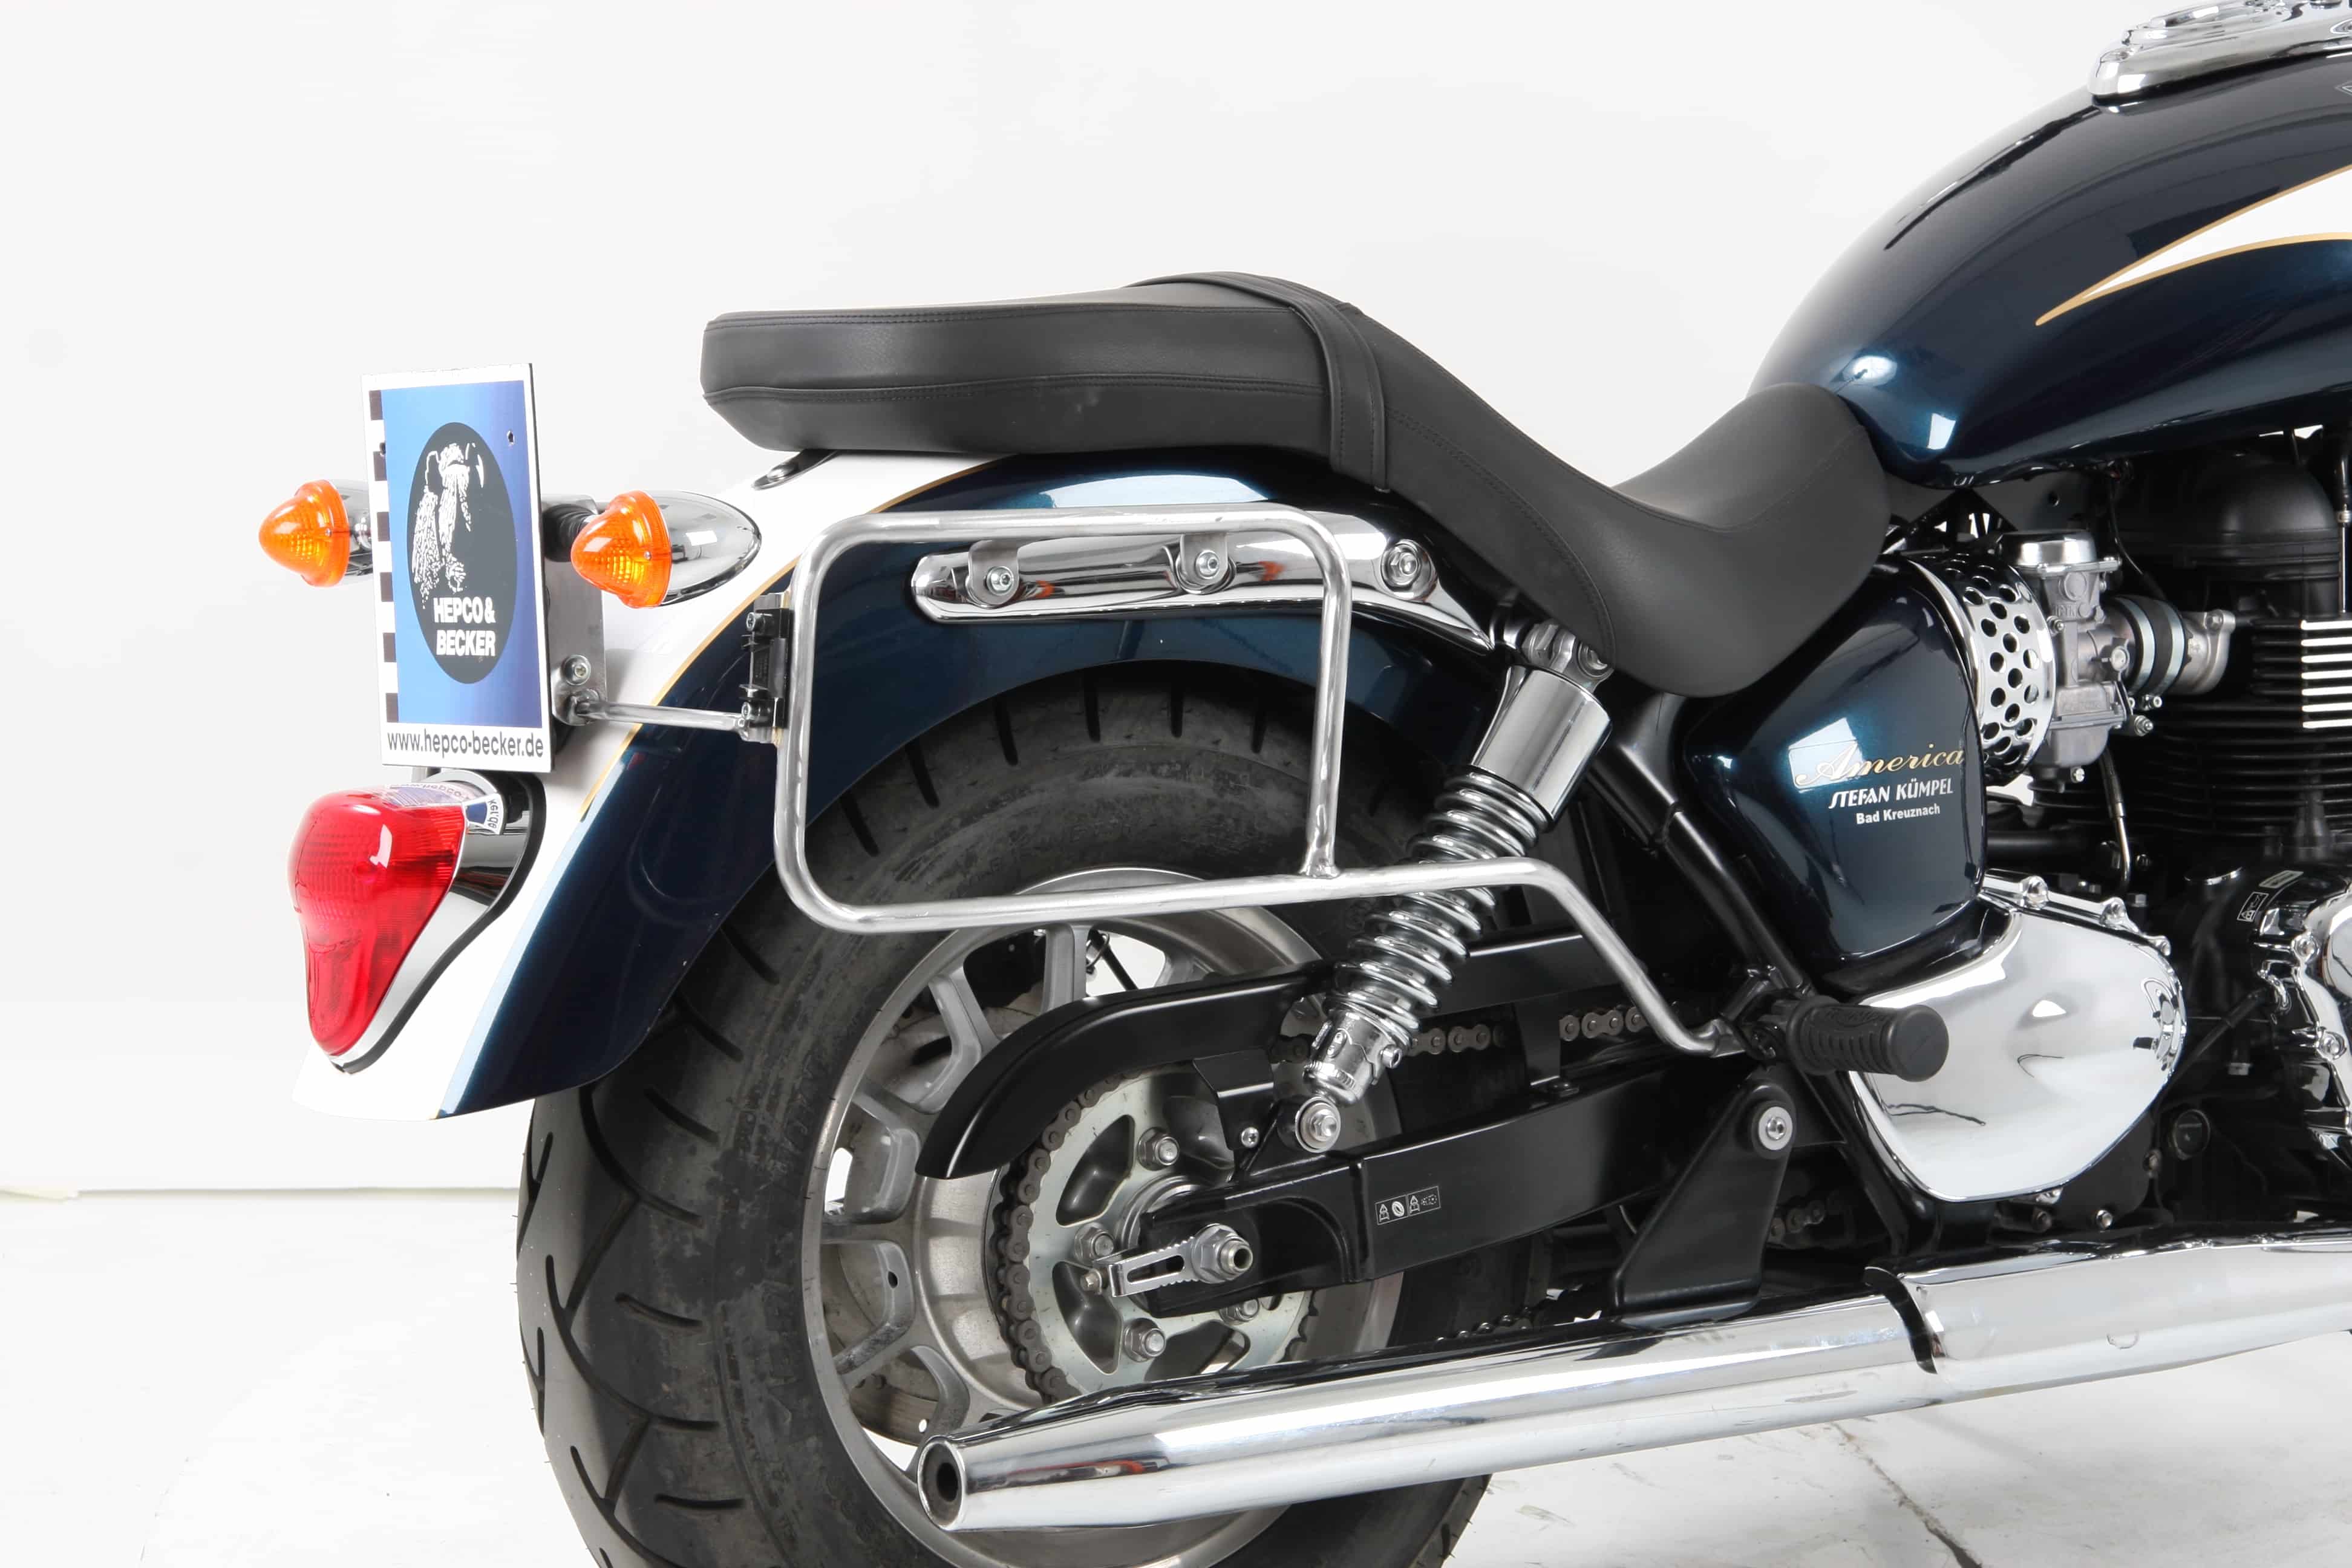 Sidecarrier permanent mounted chrome for Triumph Bonneville Speedmaster (2011-2017)